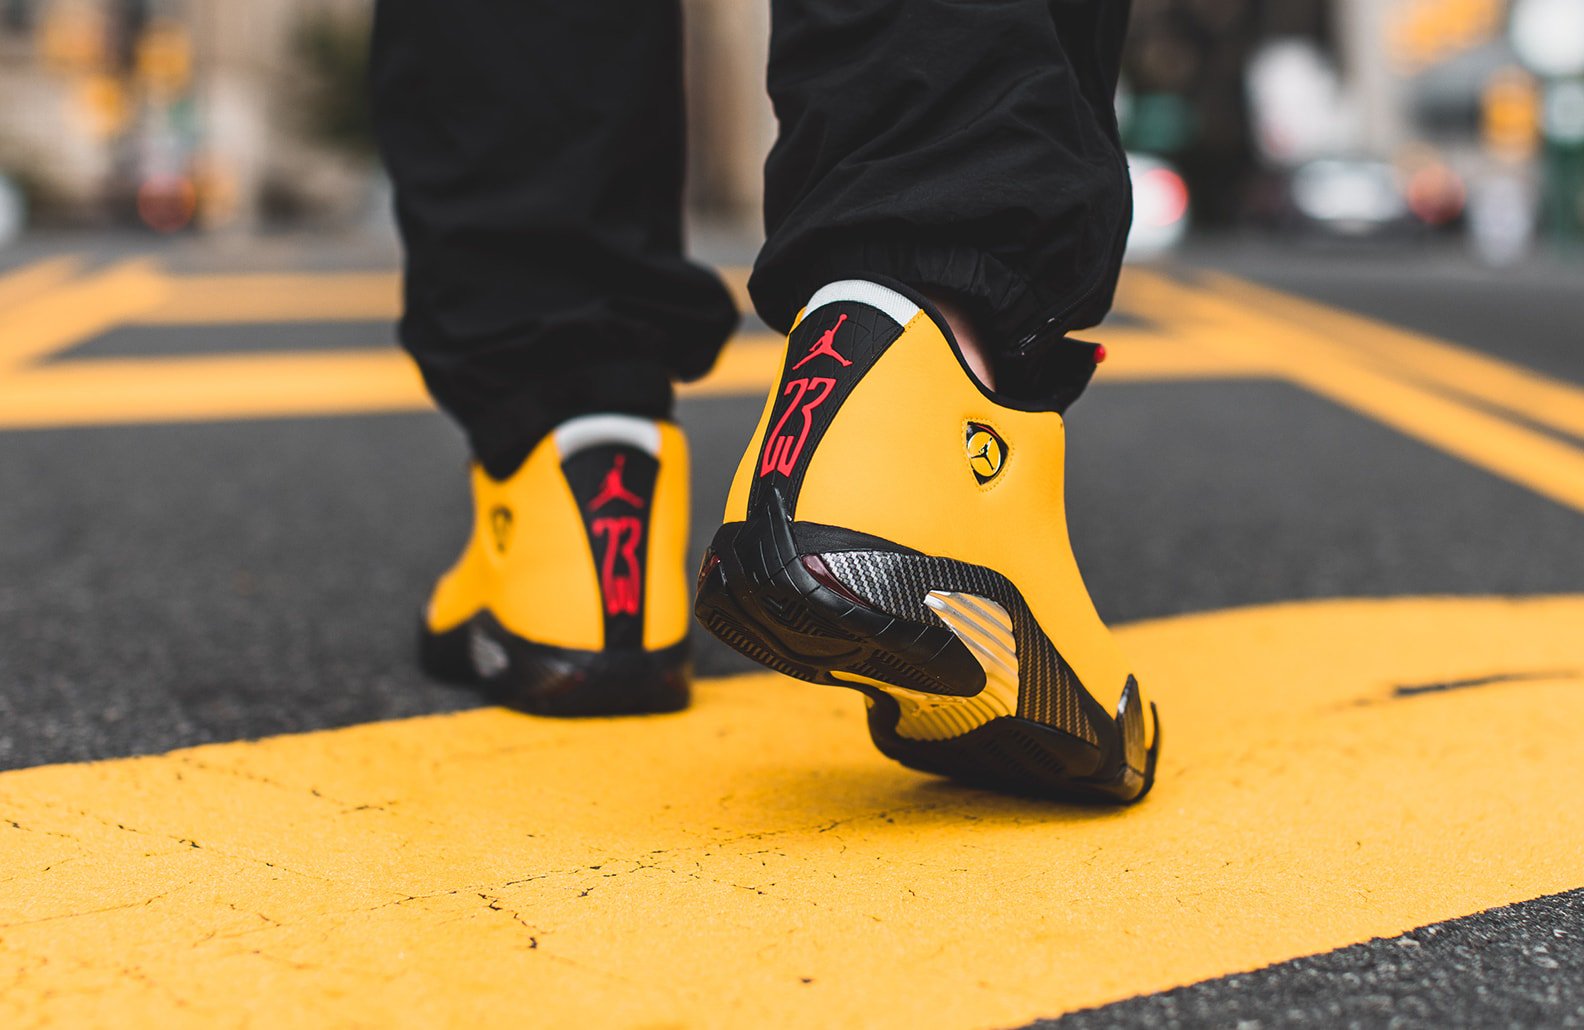 yellow 14s on feet